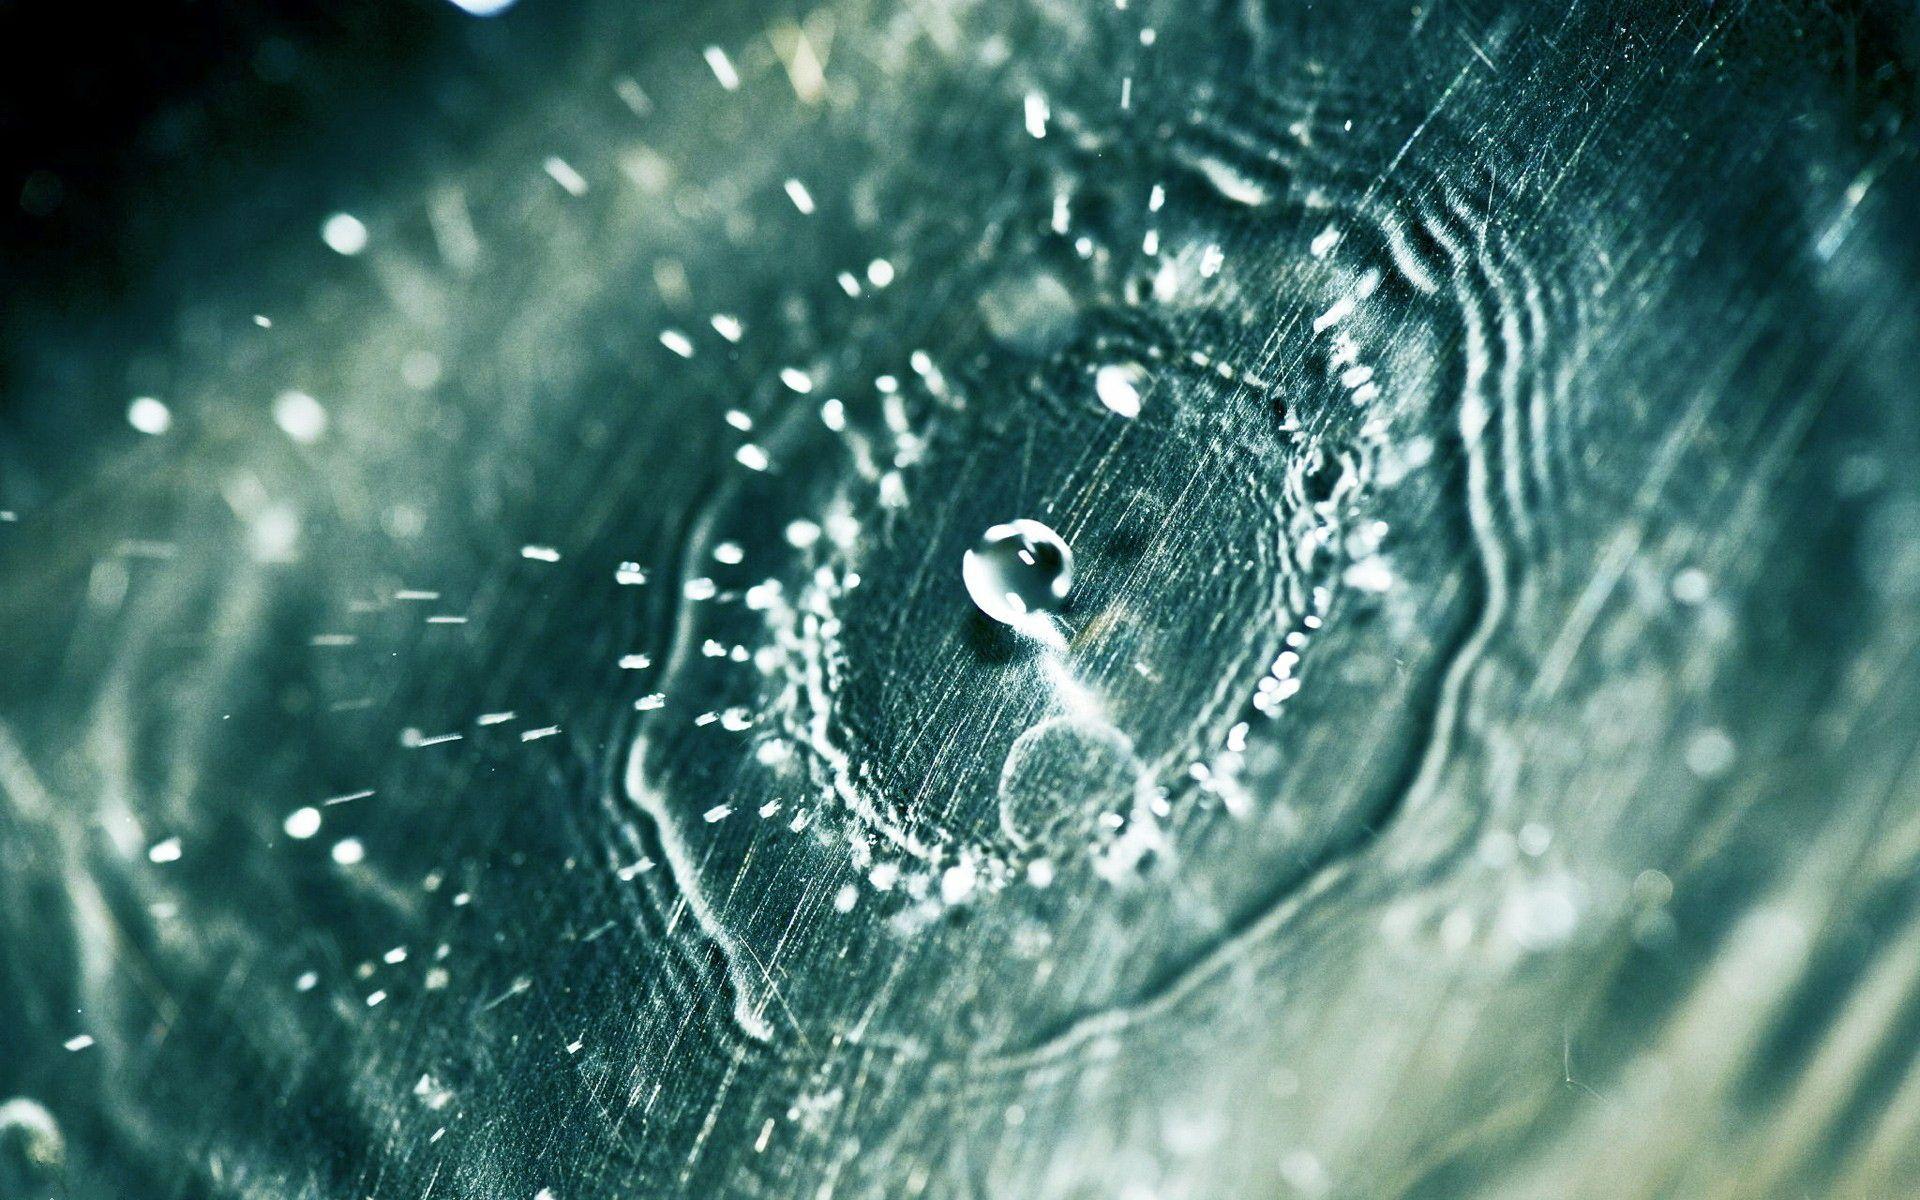 Abstract Water Drops Animated Drop 1400316 Wallpaper